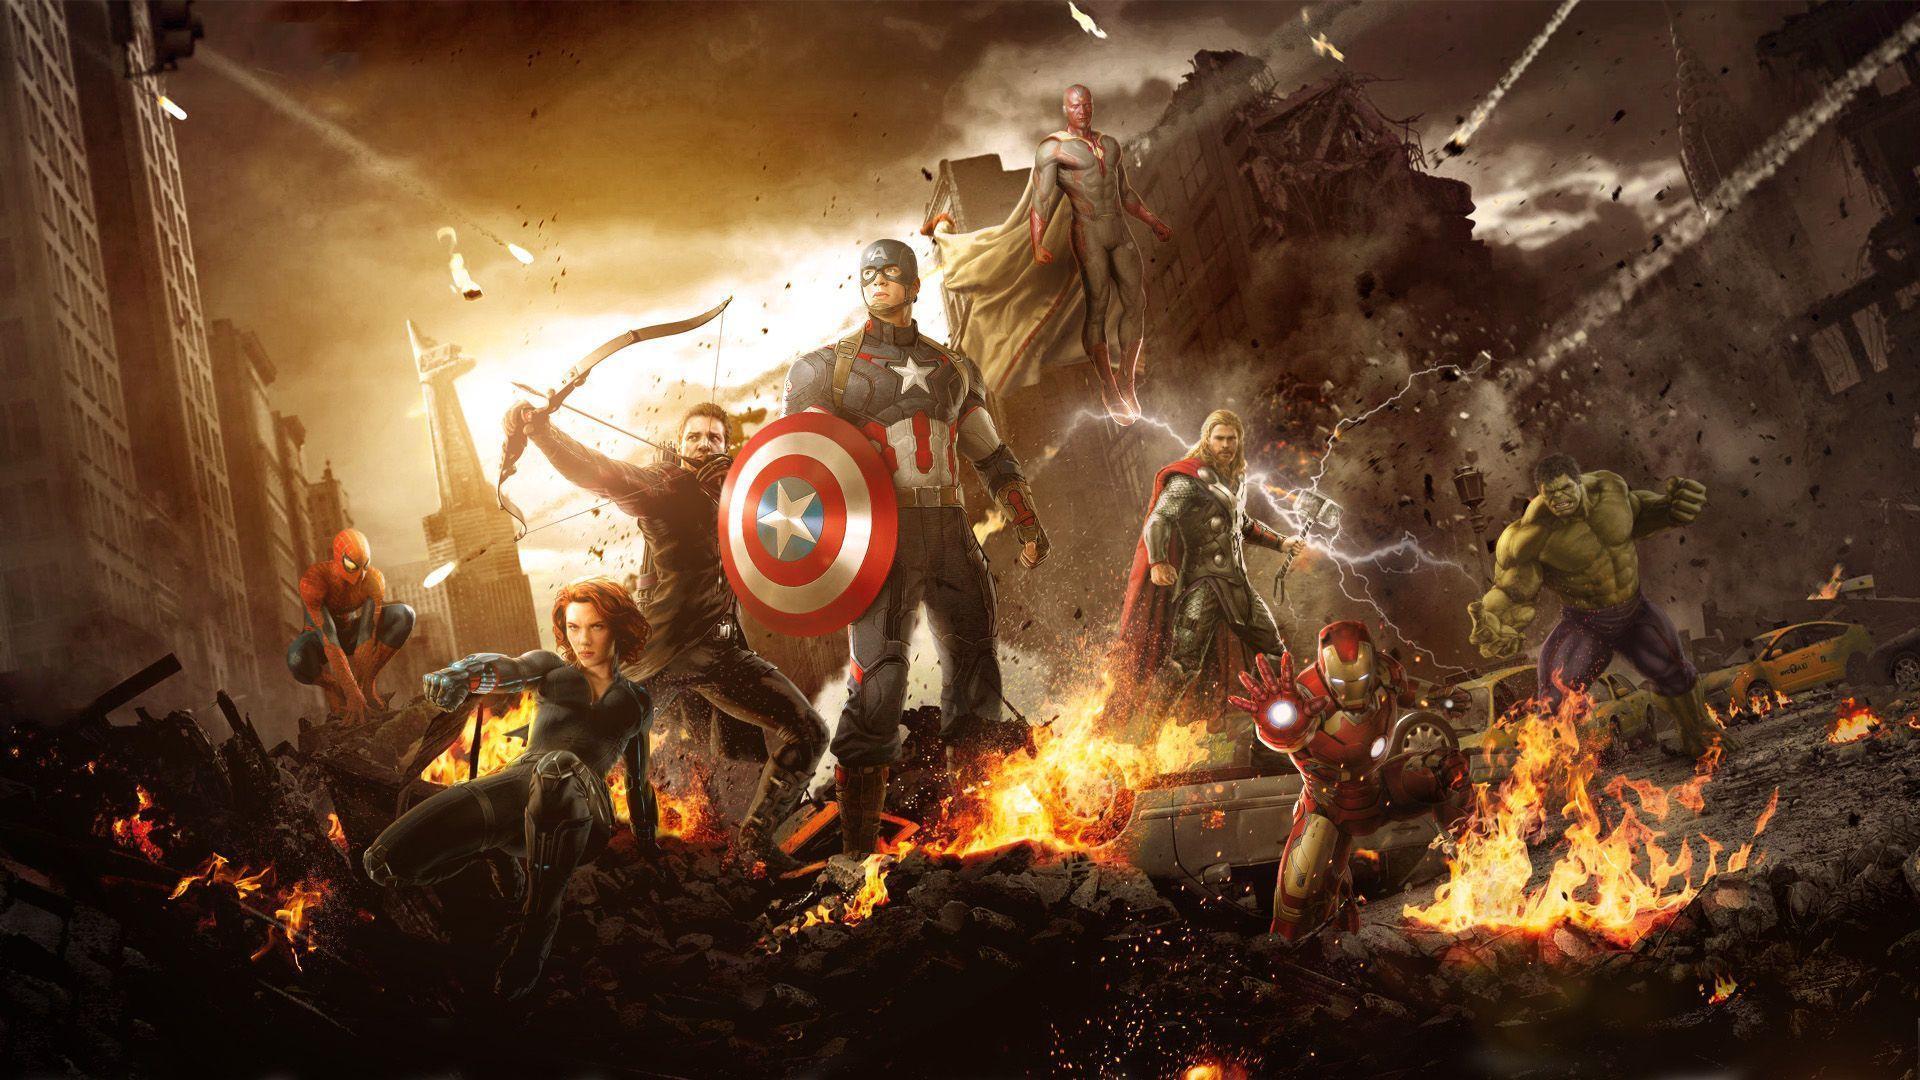 Avengers: Infinity War HD wallpapers free download